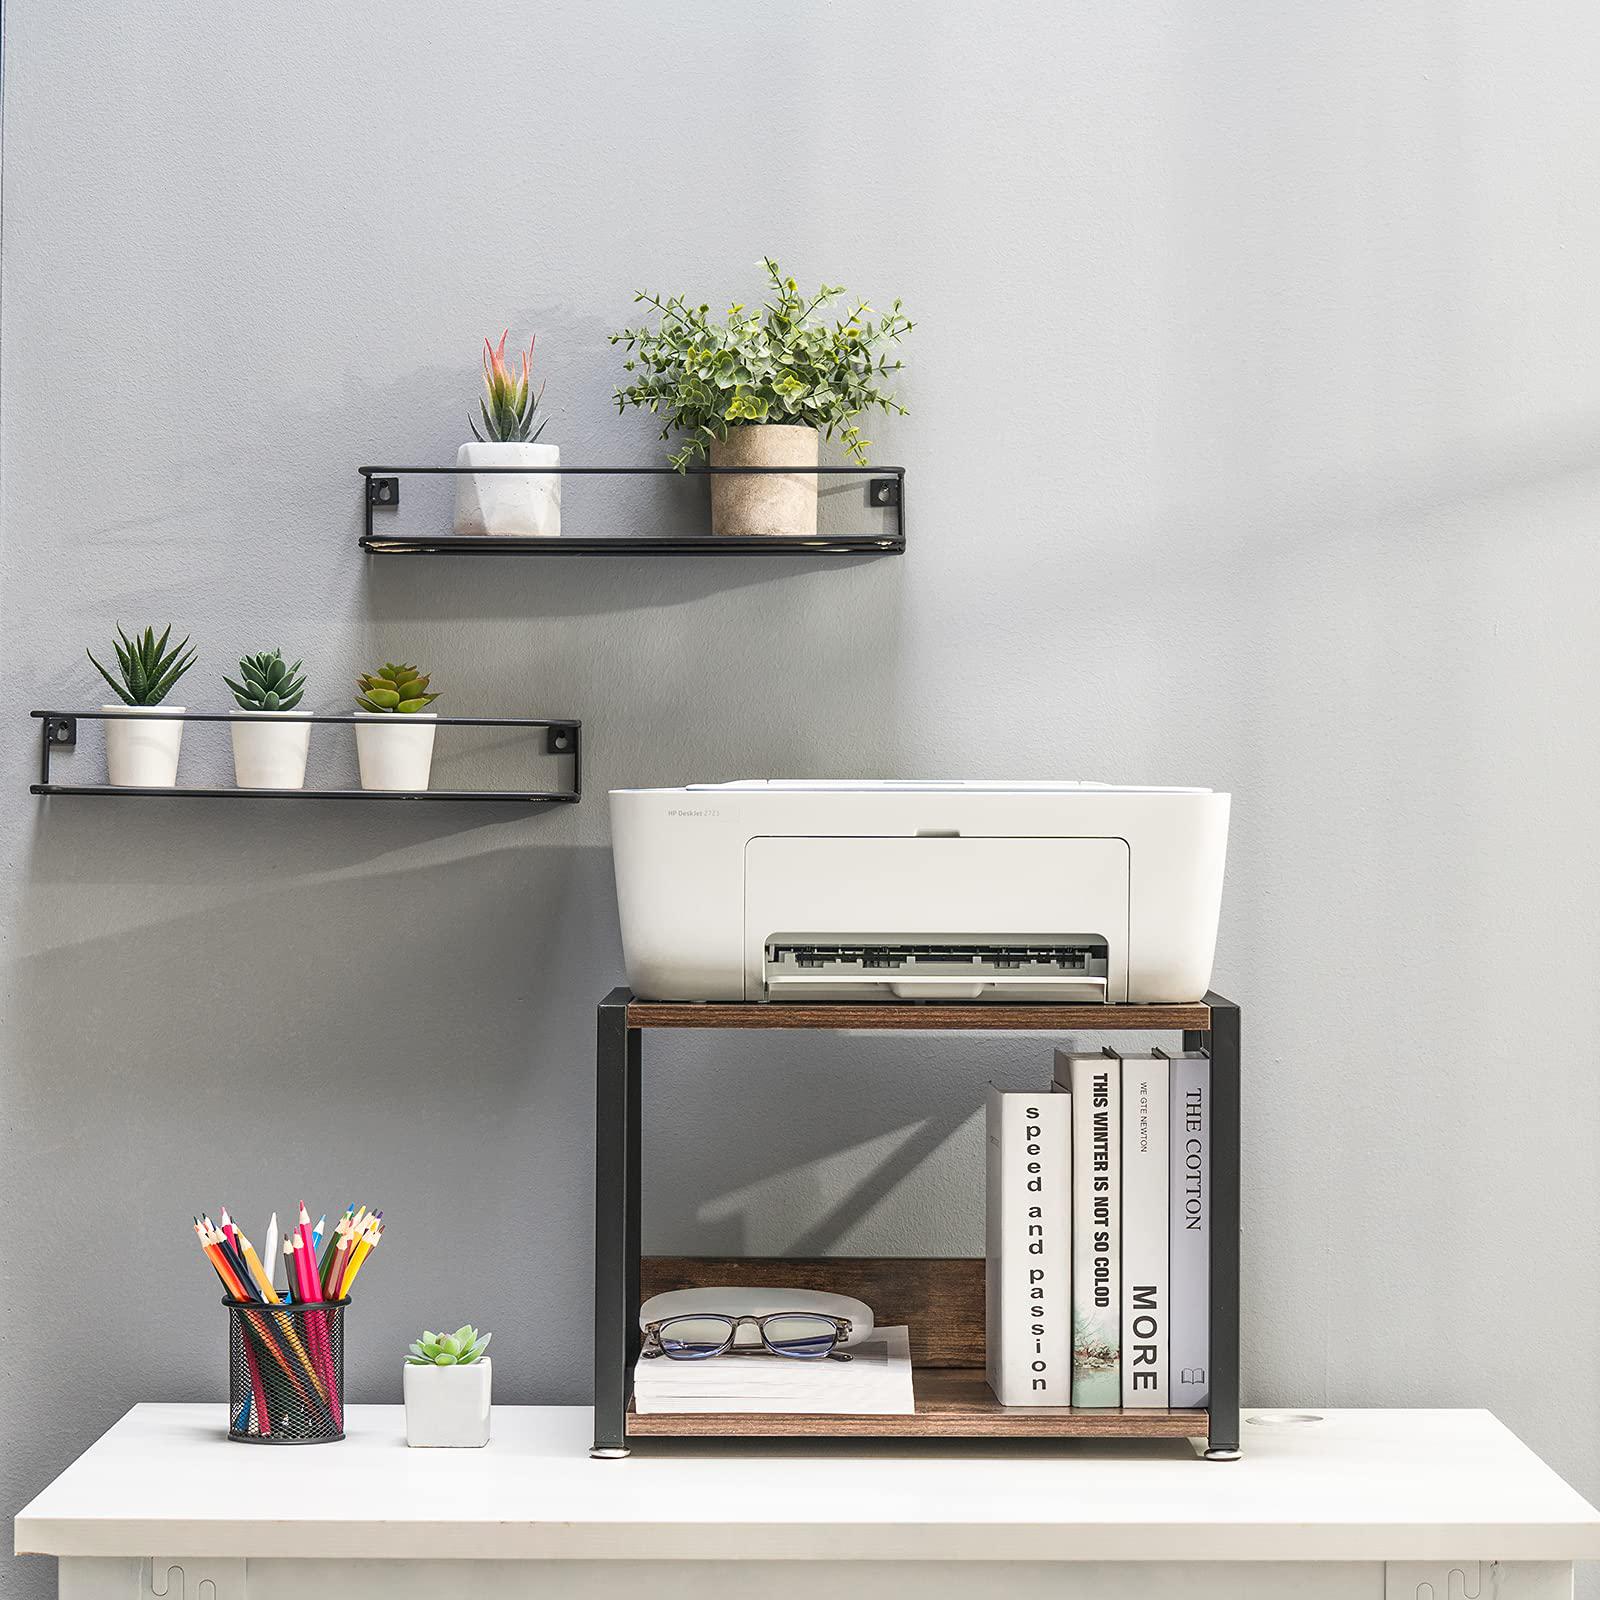 giikin desktop printer stand with 2 tier wood storage shelves, multi-purpose desk organizer for fax machine, scanner, files, 